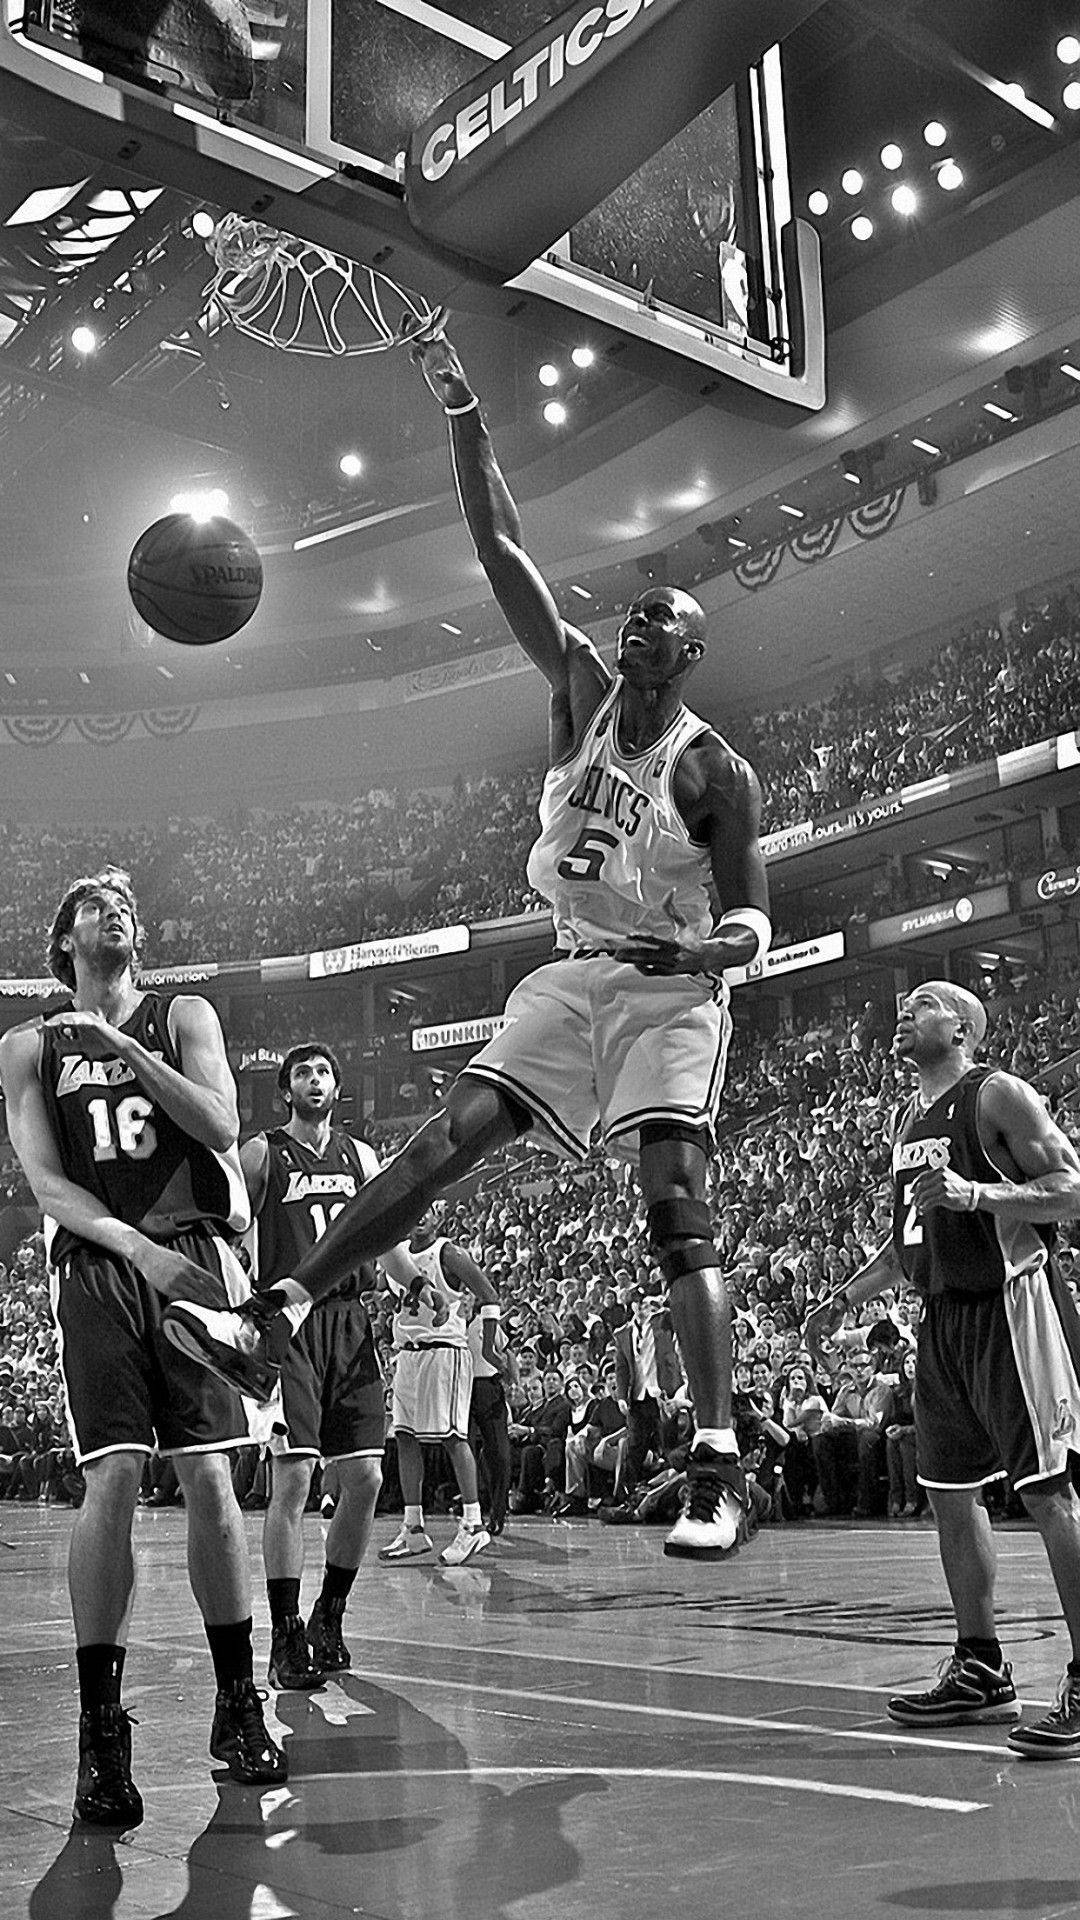 Wallpaper: NBA iPhone Kevin Garnett Celtics mod Lakers Wallpaper. Wallpaper